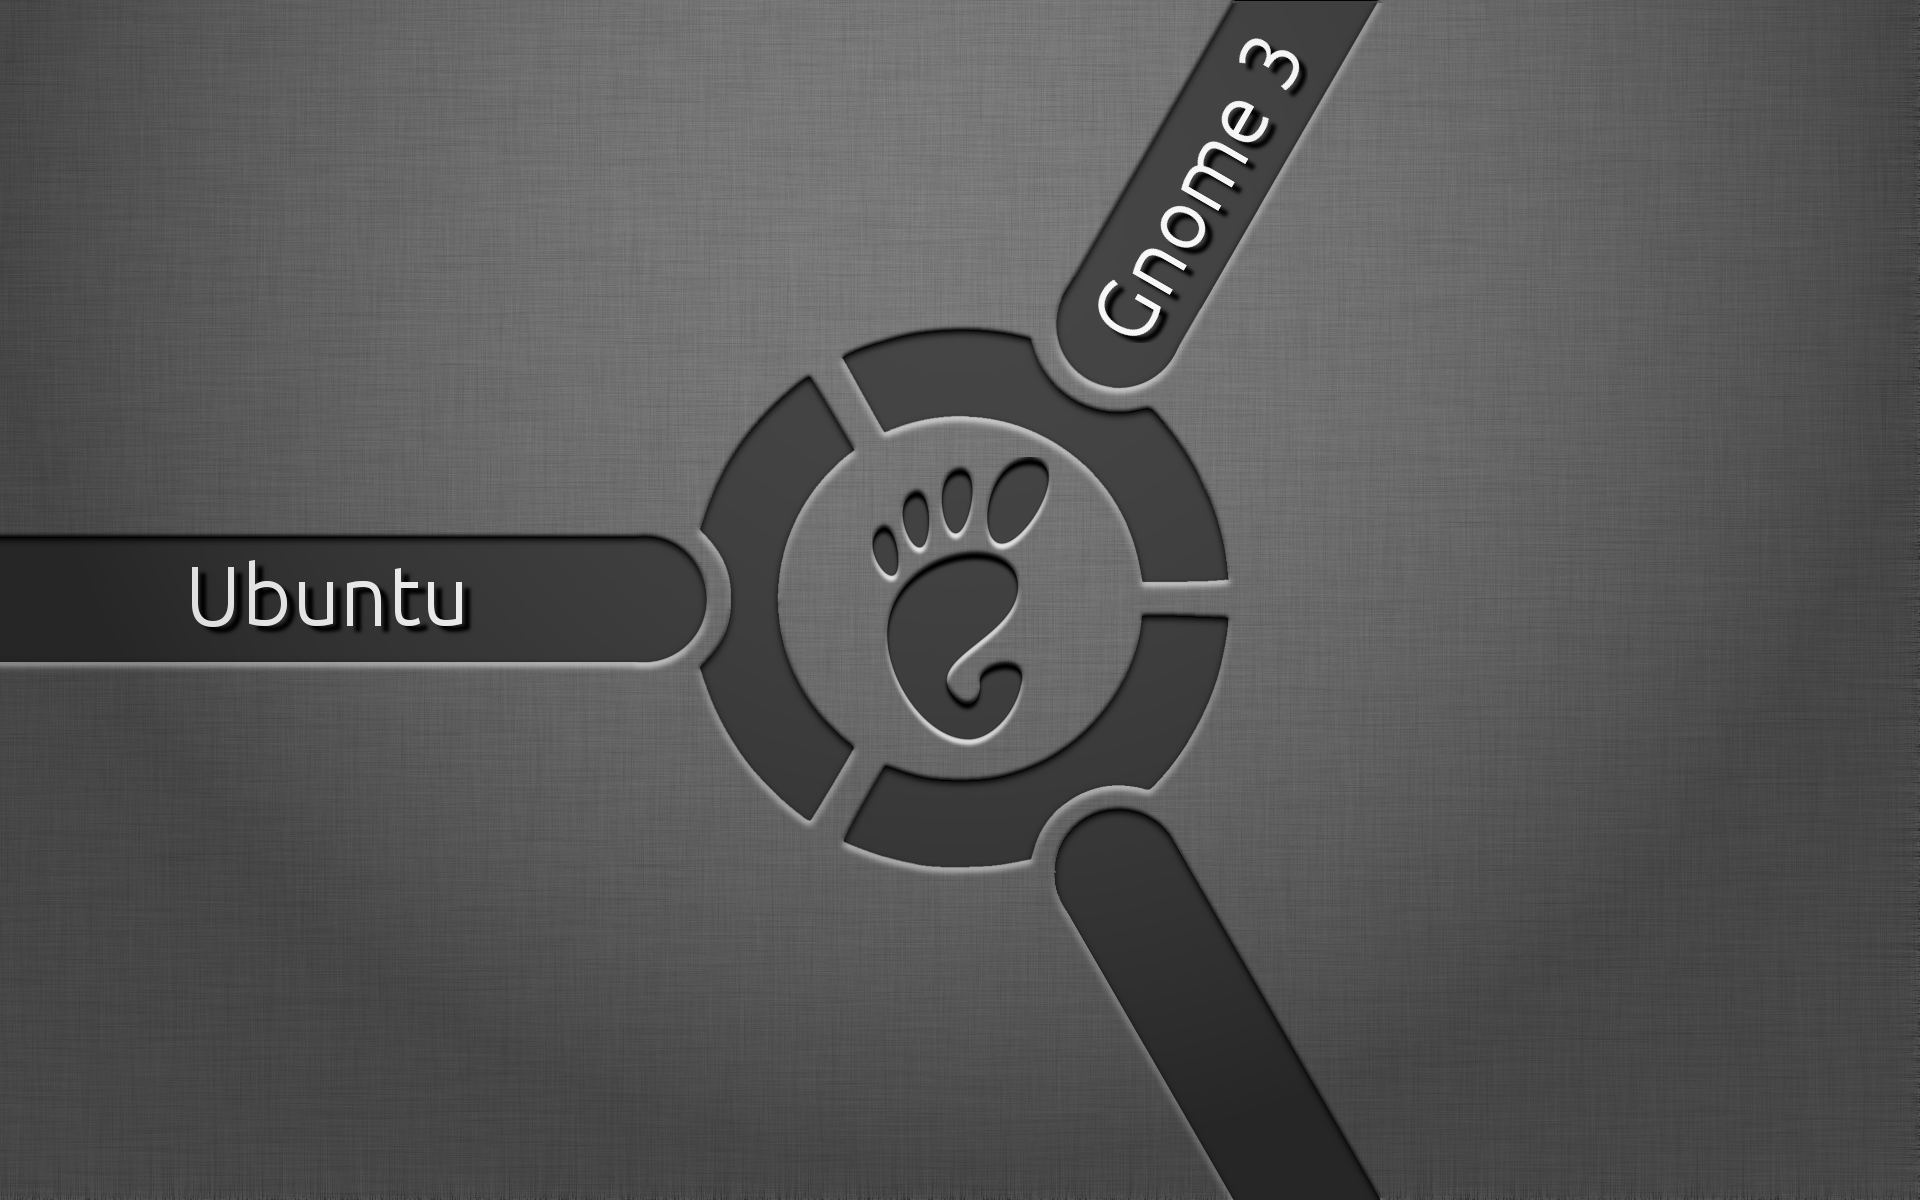 Wallpaper - Ubuntu and Gnome 3 by jrogge on DeviantArt